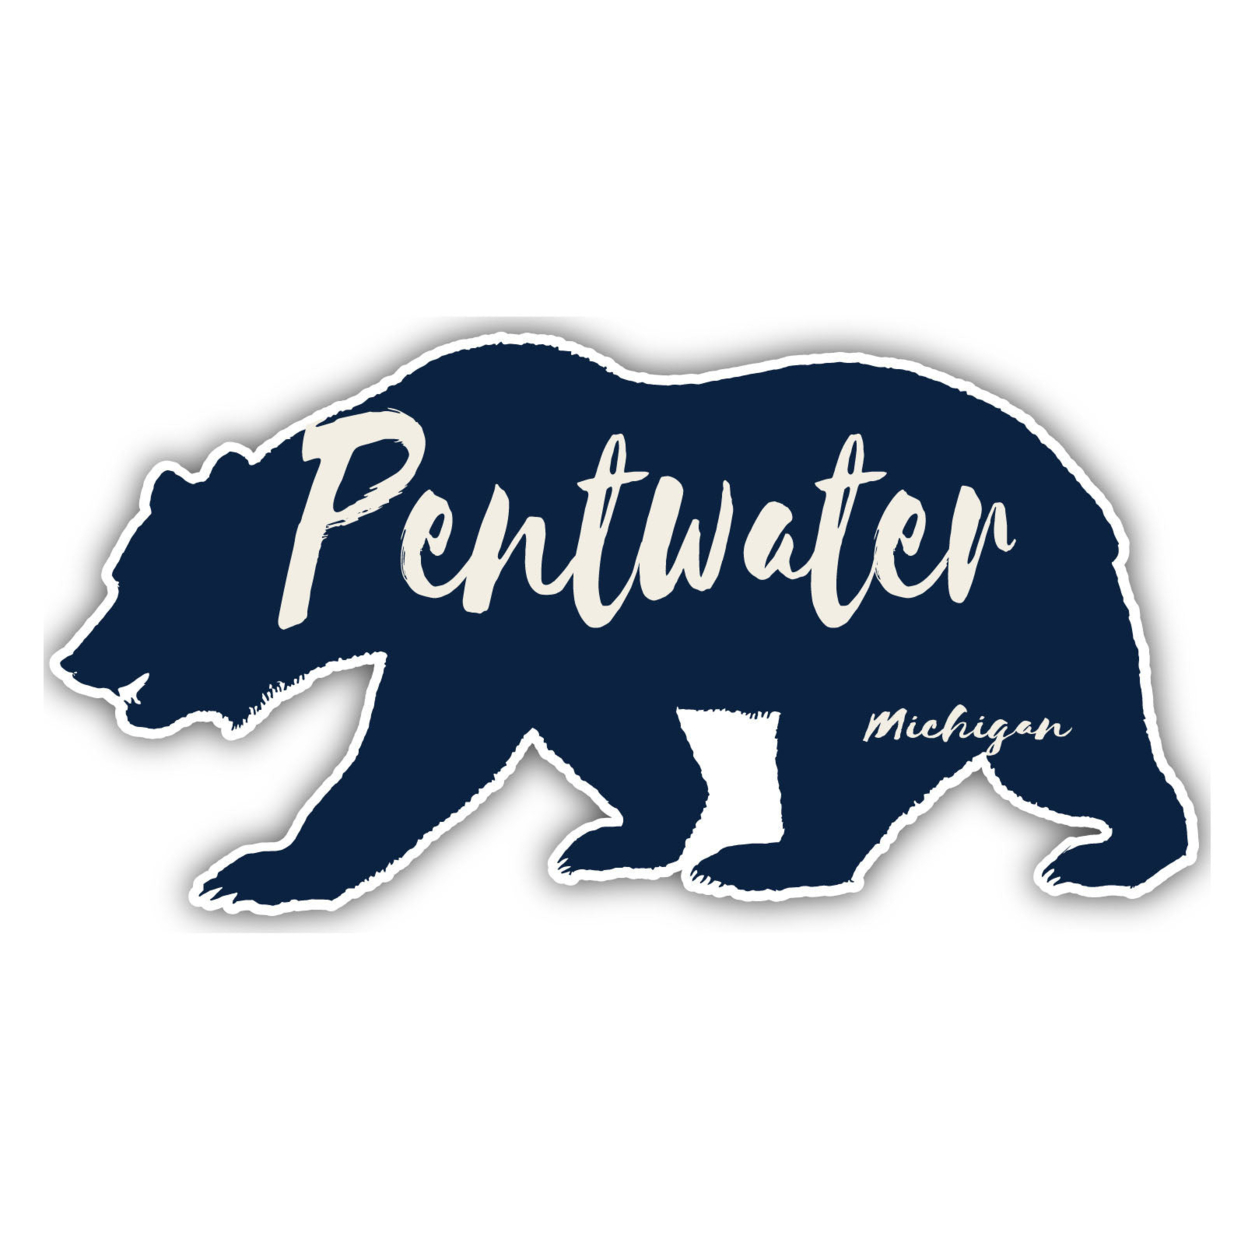 Pentwater Michigan Souvenir Decorative Stickers (Choose Theme And Size) - Single Unit, 2-Inch, Bear